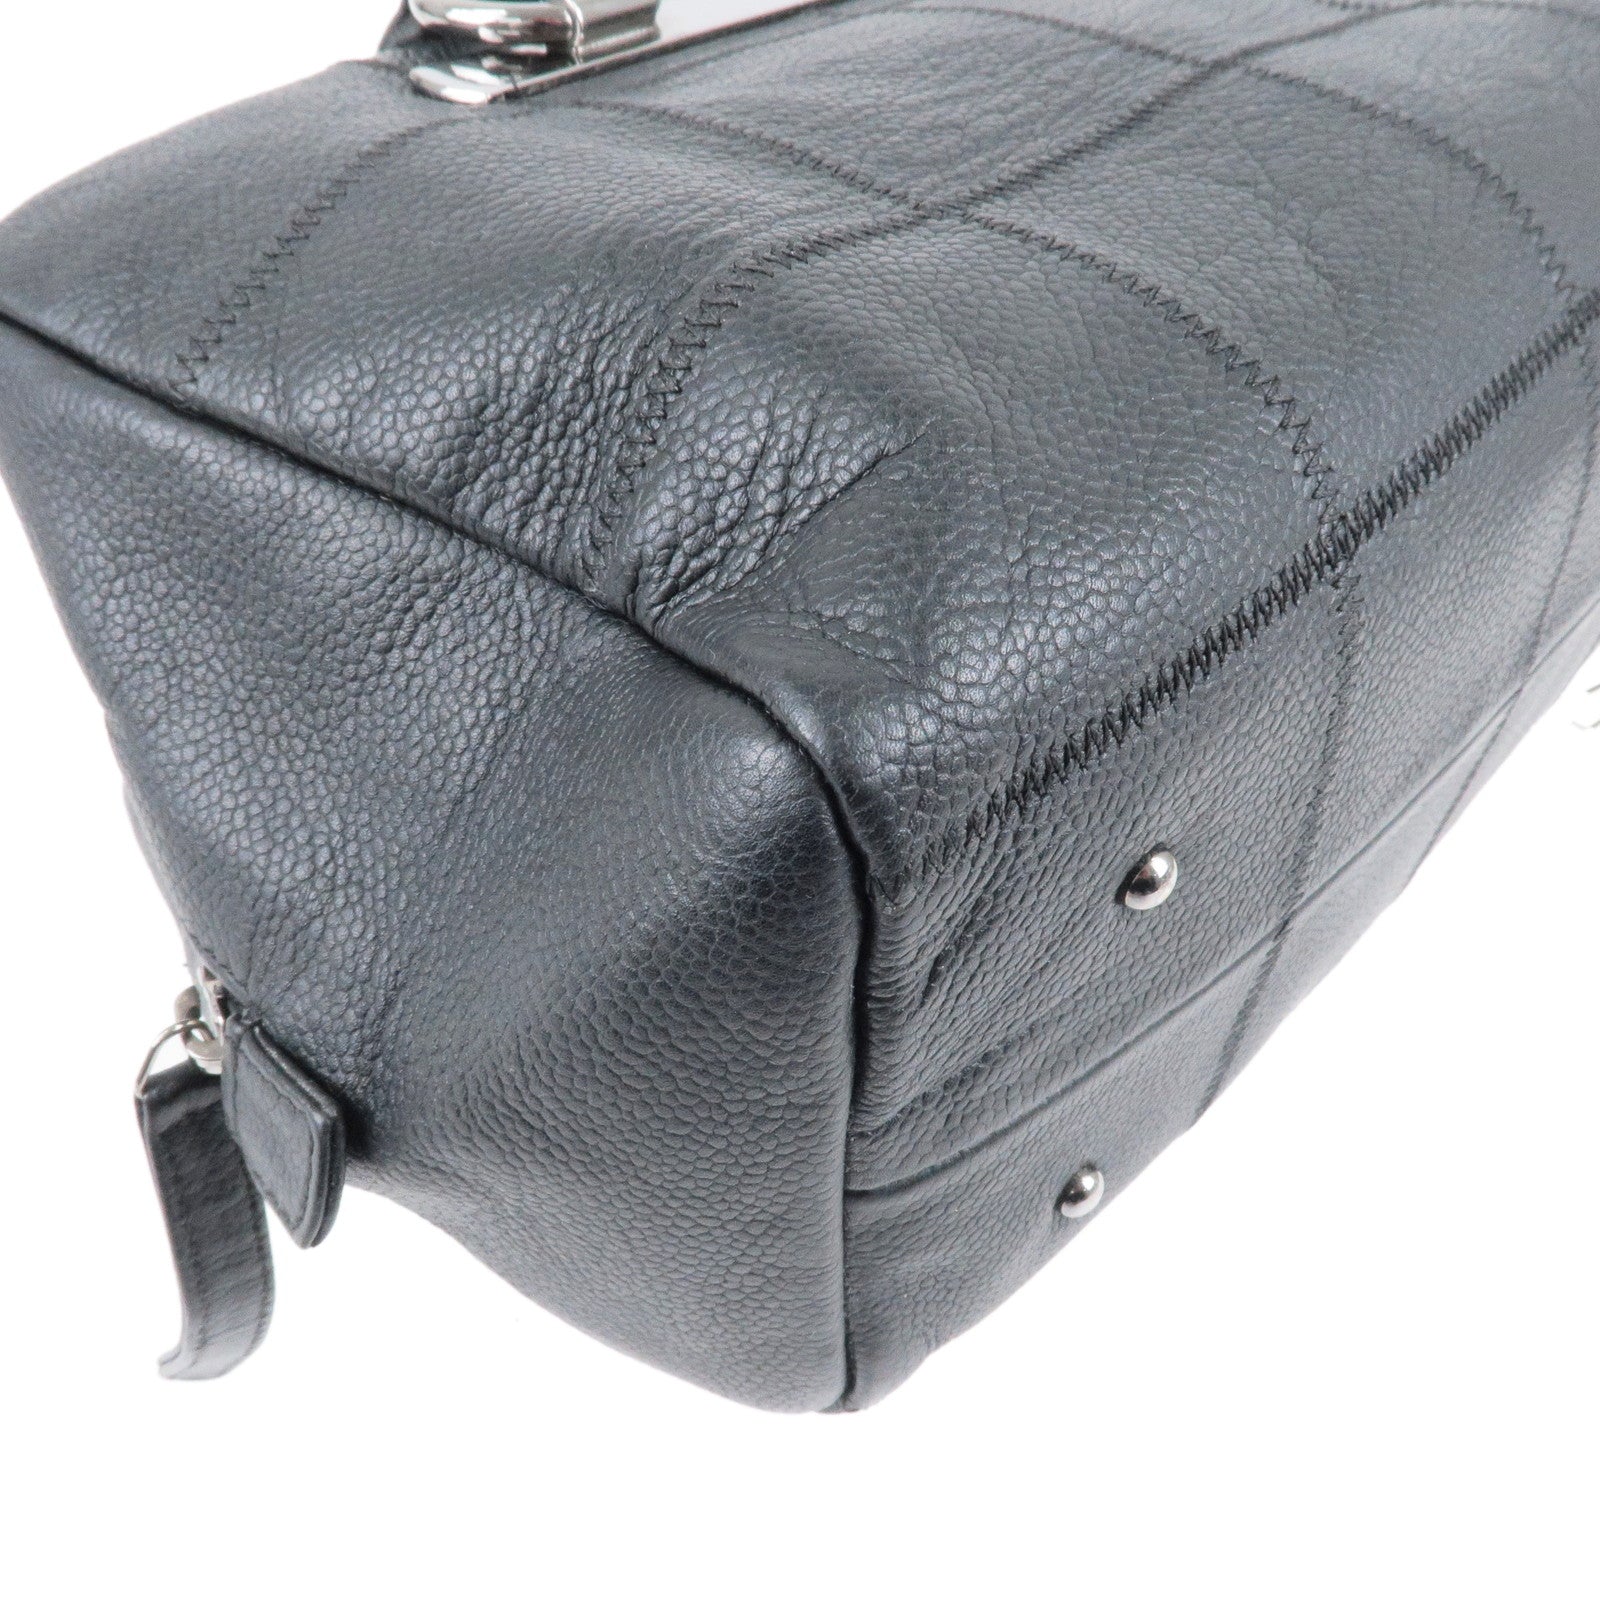 CHANEL Chocolate Bar Tote Bag Matte Black Silver Hardware Handbag from JP